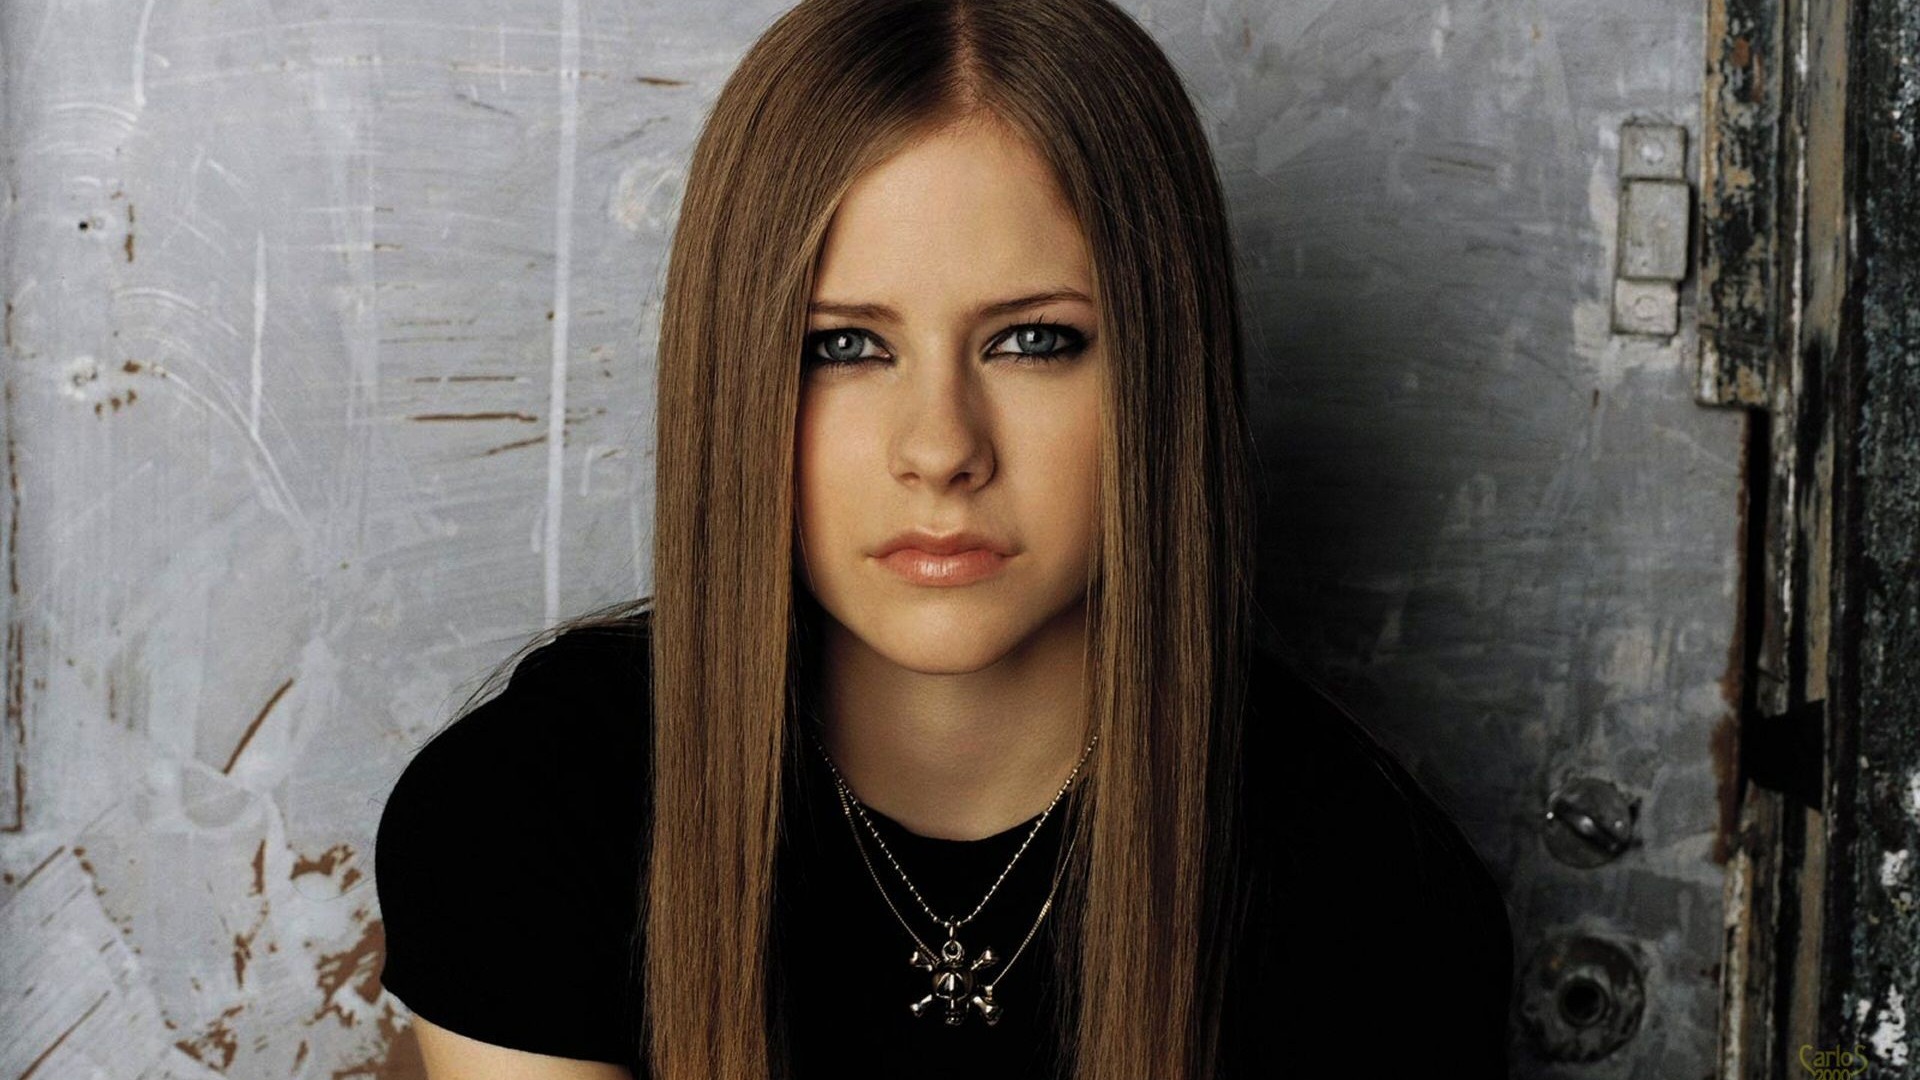 Avril Lavigne 艾薇儿 拉维妮美女壁纸 二 3 1920x1080 壁纸下载 Avril Lavigne 艾薇儿 拉维妮美女壁纸 二 人物壁纸 V3壁纸站